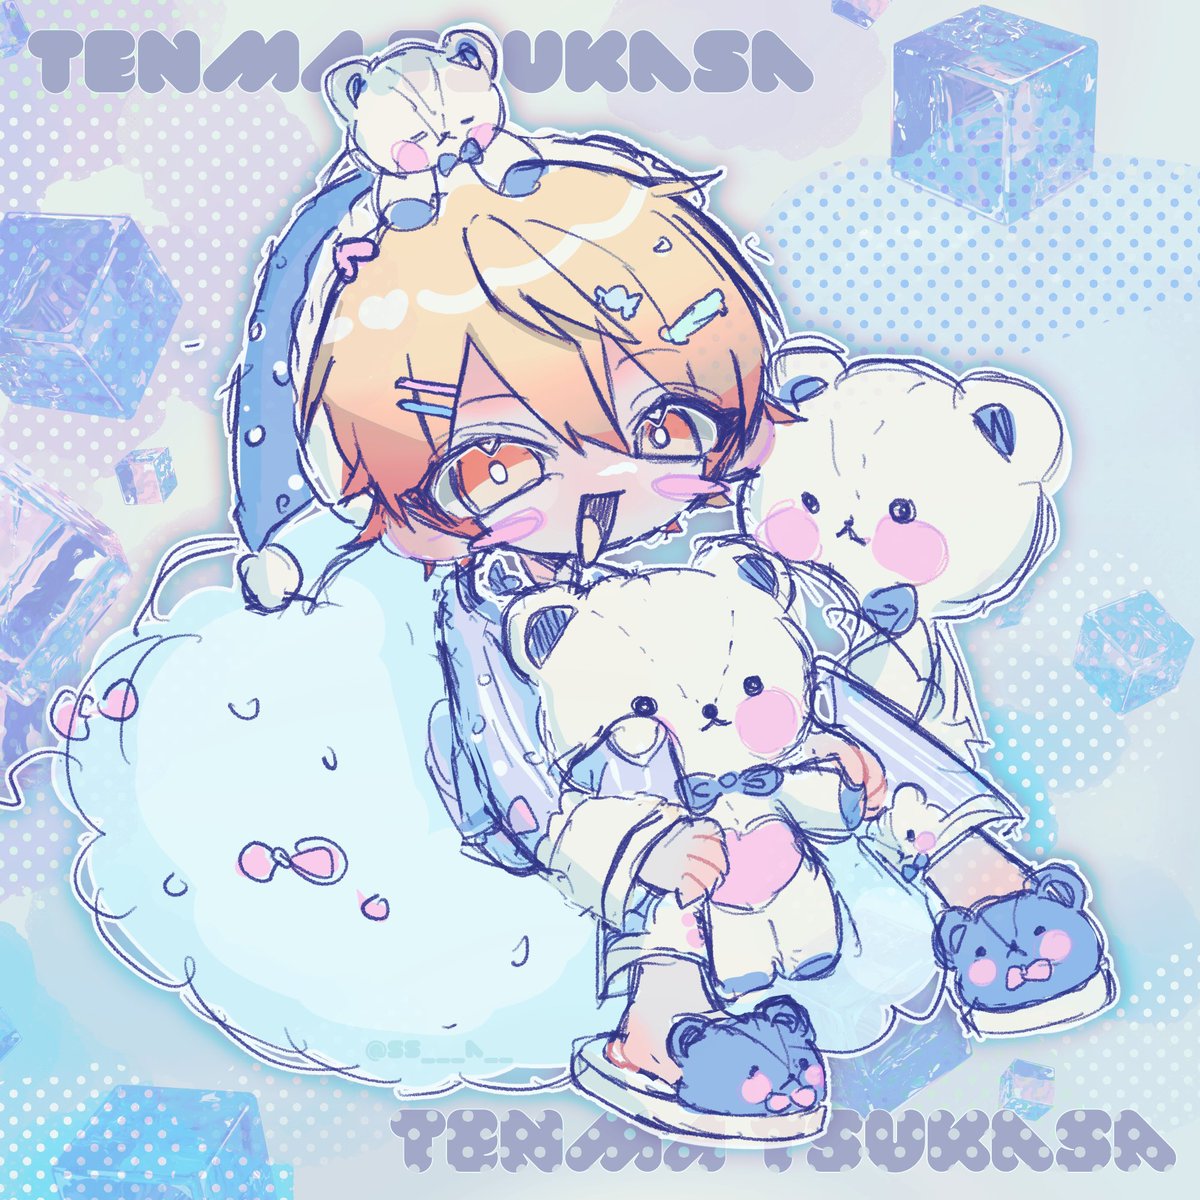 tenma tsukasa stuffed toy 1boy teddy bear stuffed animal male focus slippers pajamas  illustration images